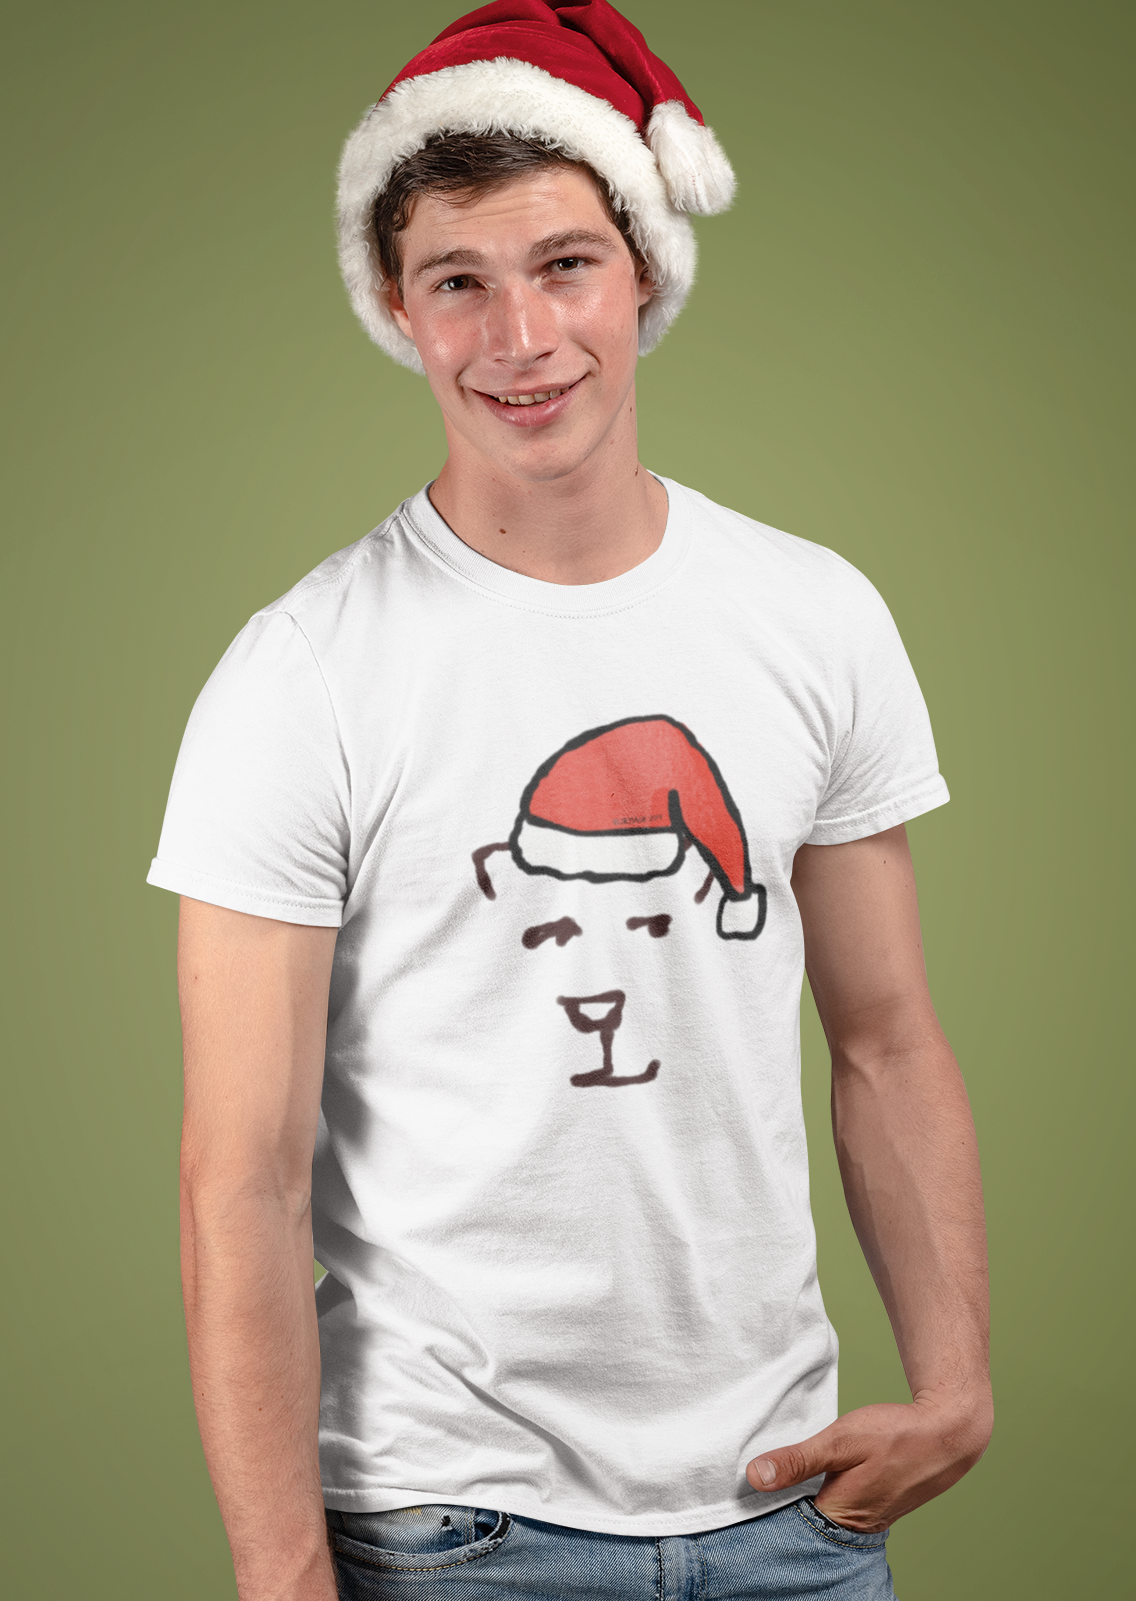 Young man with Santa hat wearing a Santa Polar Bear cute Christmas T-shirt illustrated design by Hector and Bone on a Vegan tee shirt